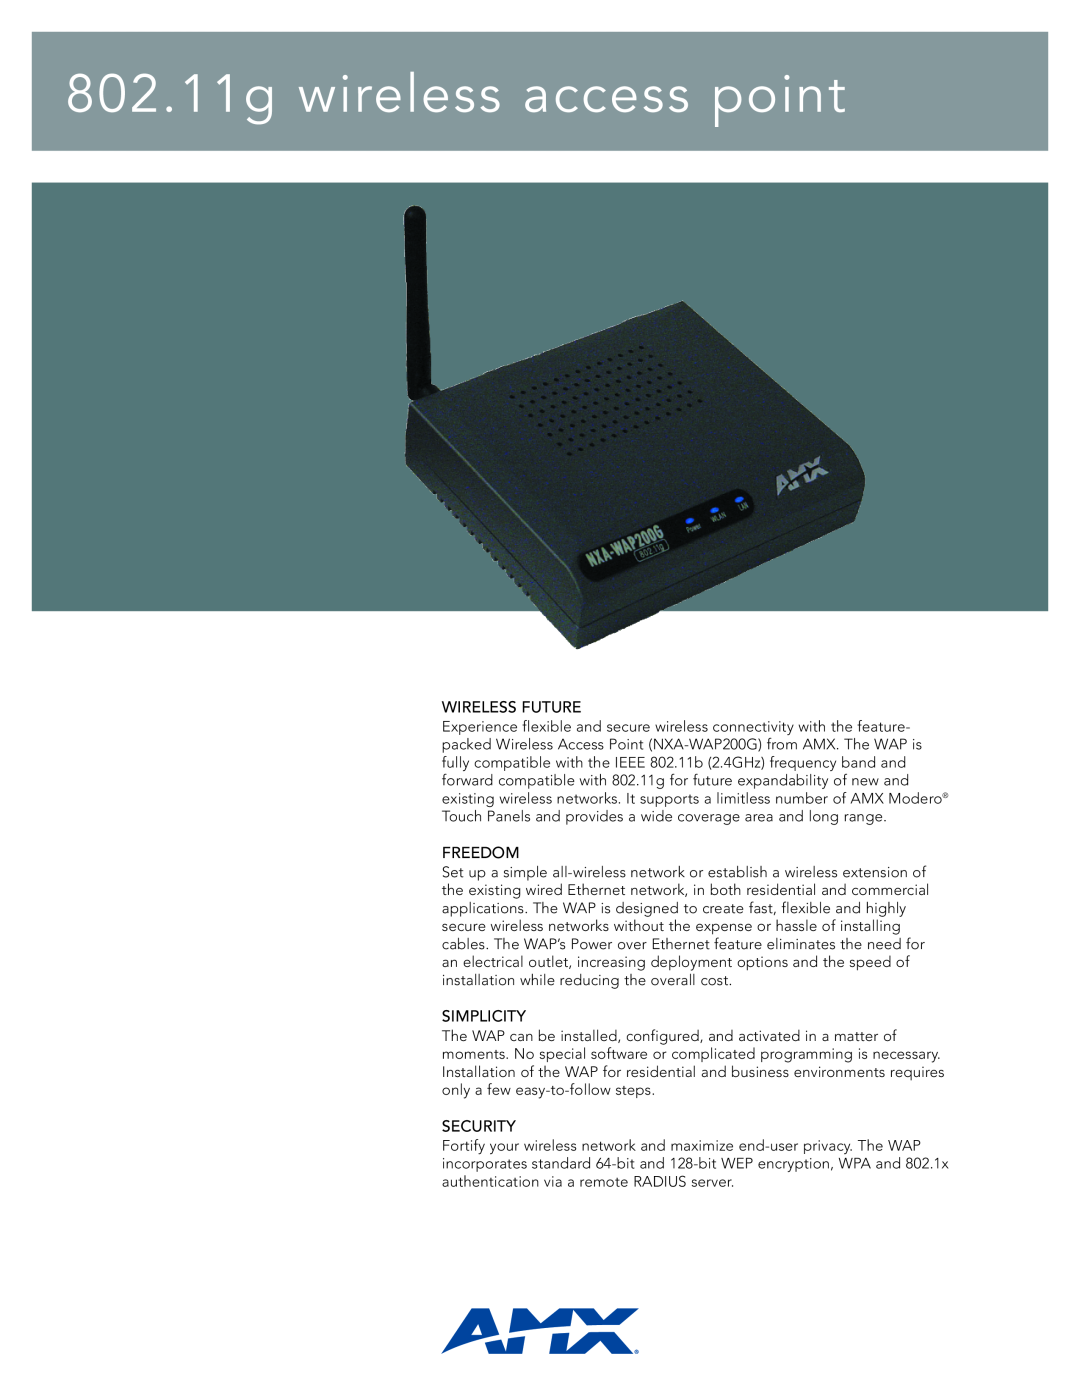 AMX NXA-WAP200G manual 802.11g wireless access point, Wireless Future, Freedom, Simplicity, Security 